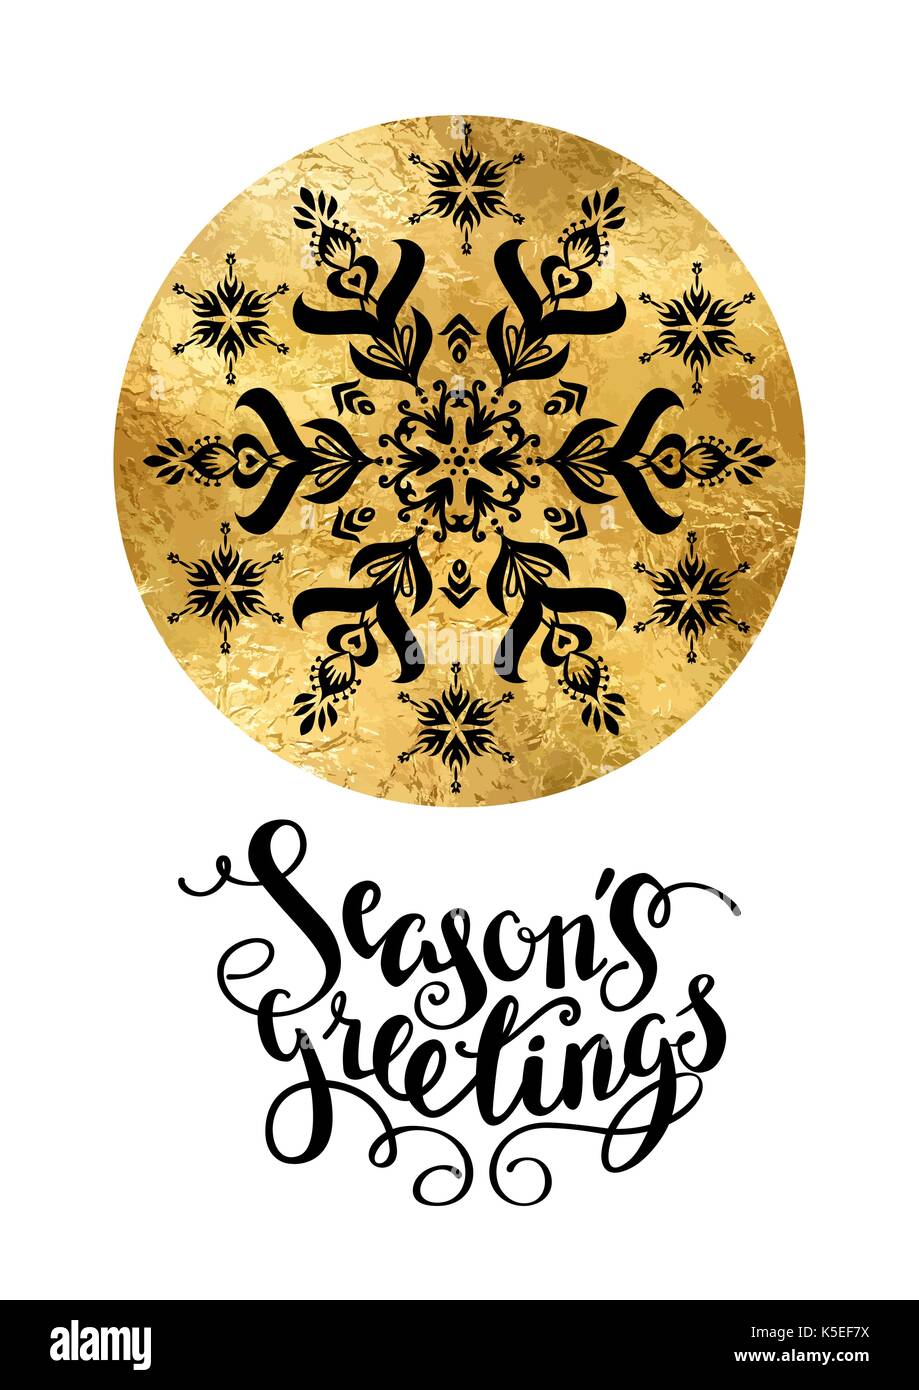 Seasons greetings Christmas Card Stock Vektor